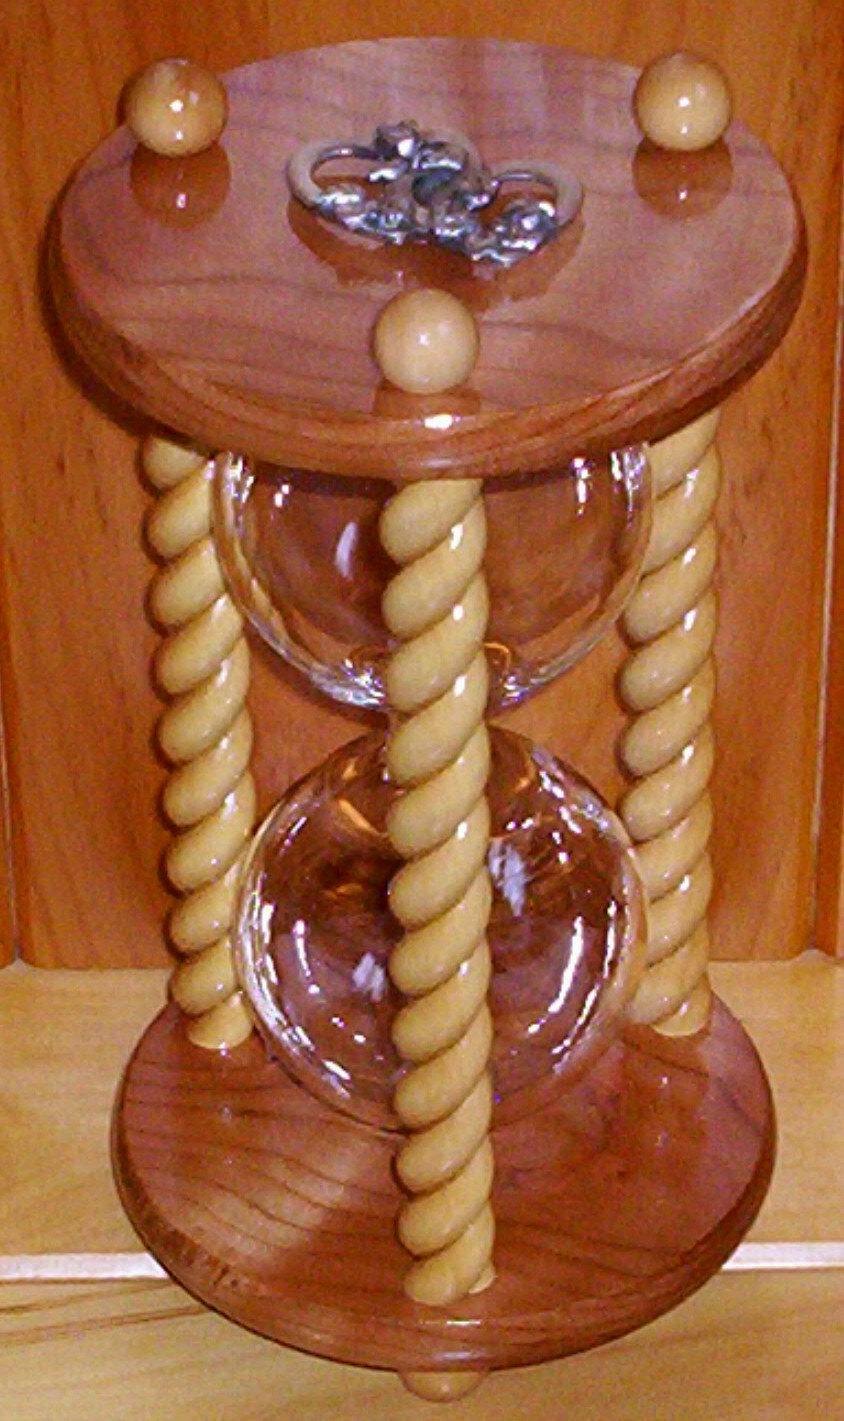 Hochzeit - Unity Hourglass - The Honeymoon Cherry and Maple Wedding Unity Sand Ceremony Hourglass by Heirloom Hourglass - The Original Unity Hourglass